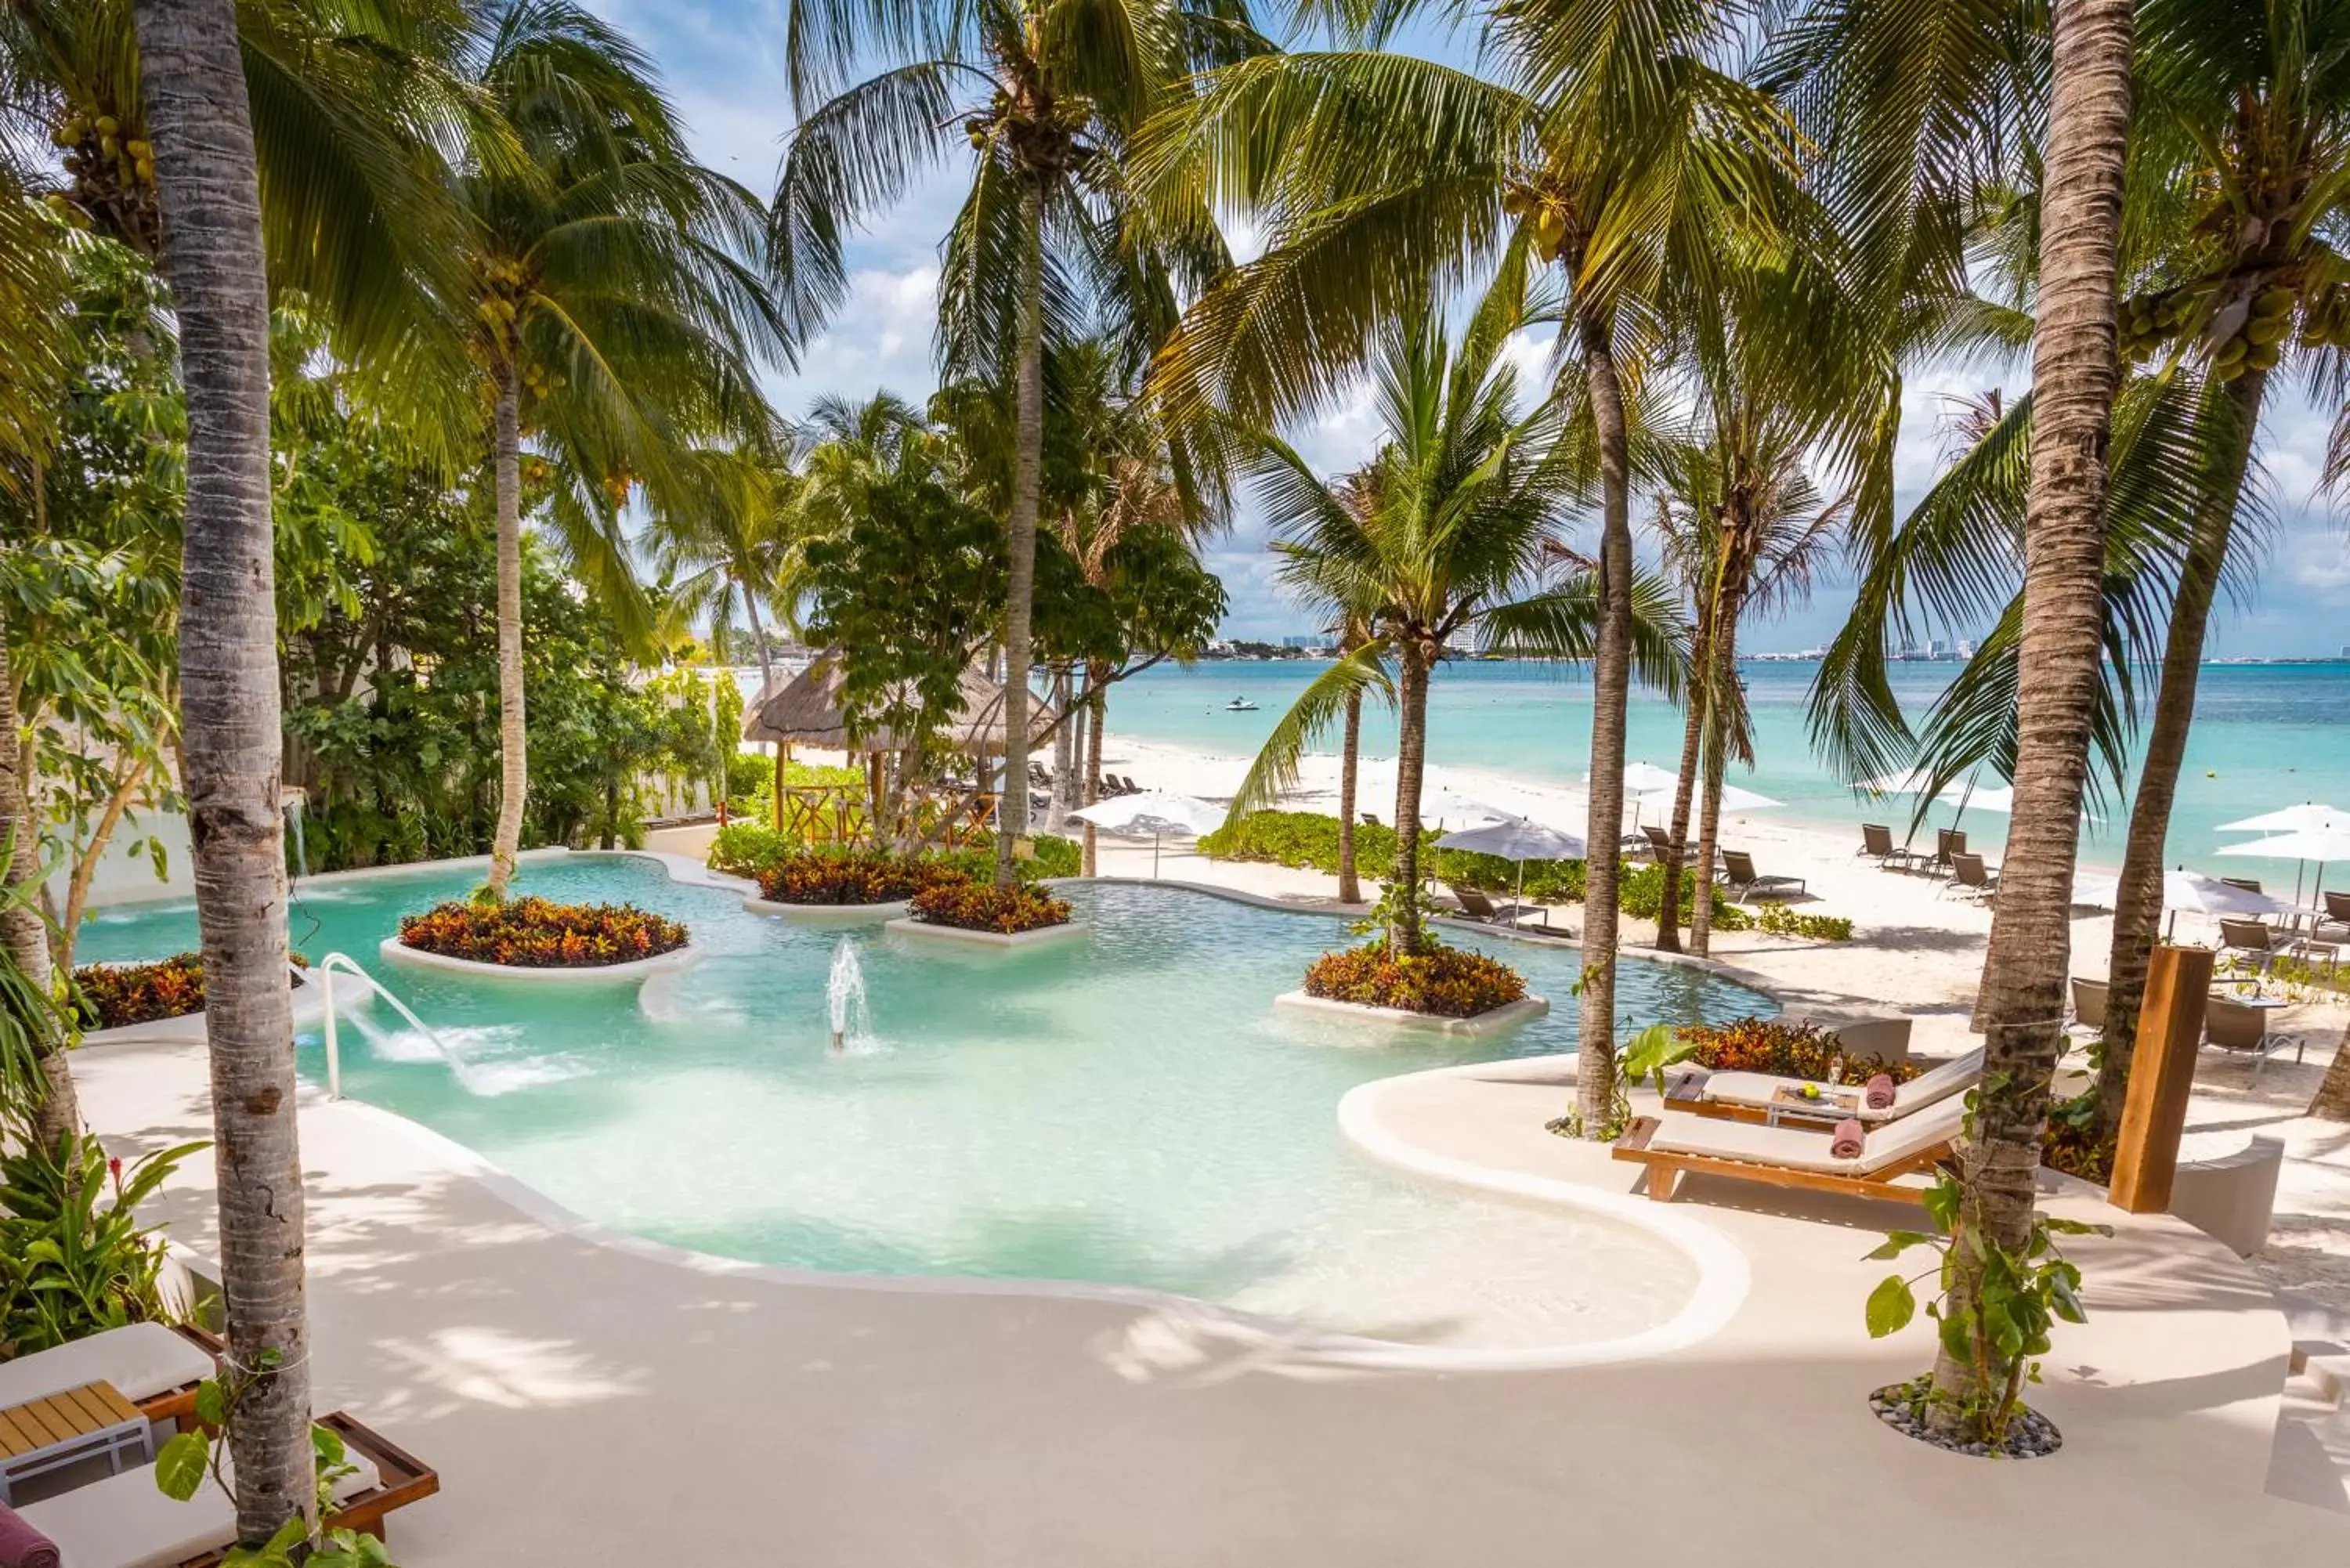 Swimming pool in Dreams Sands Cancun Resort & Spa